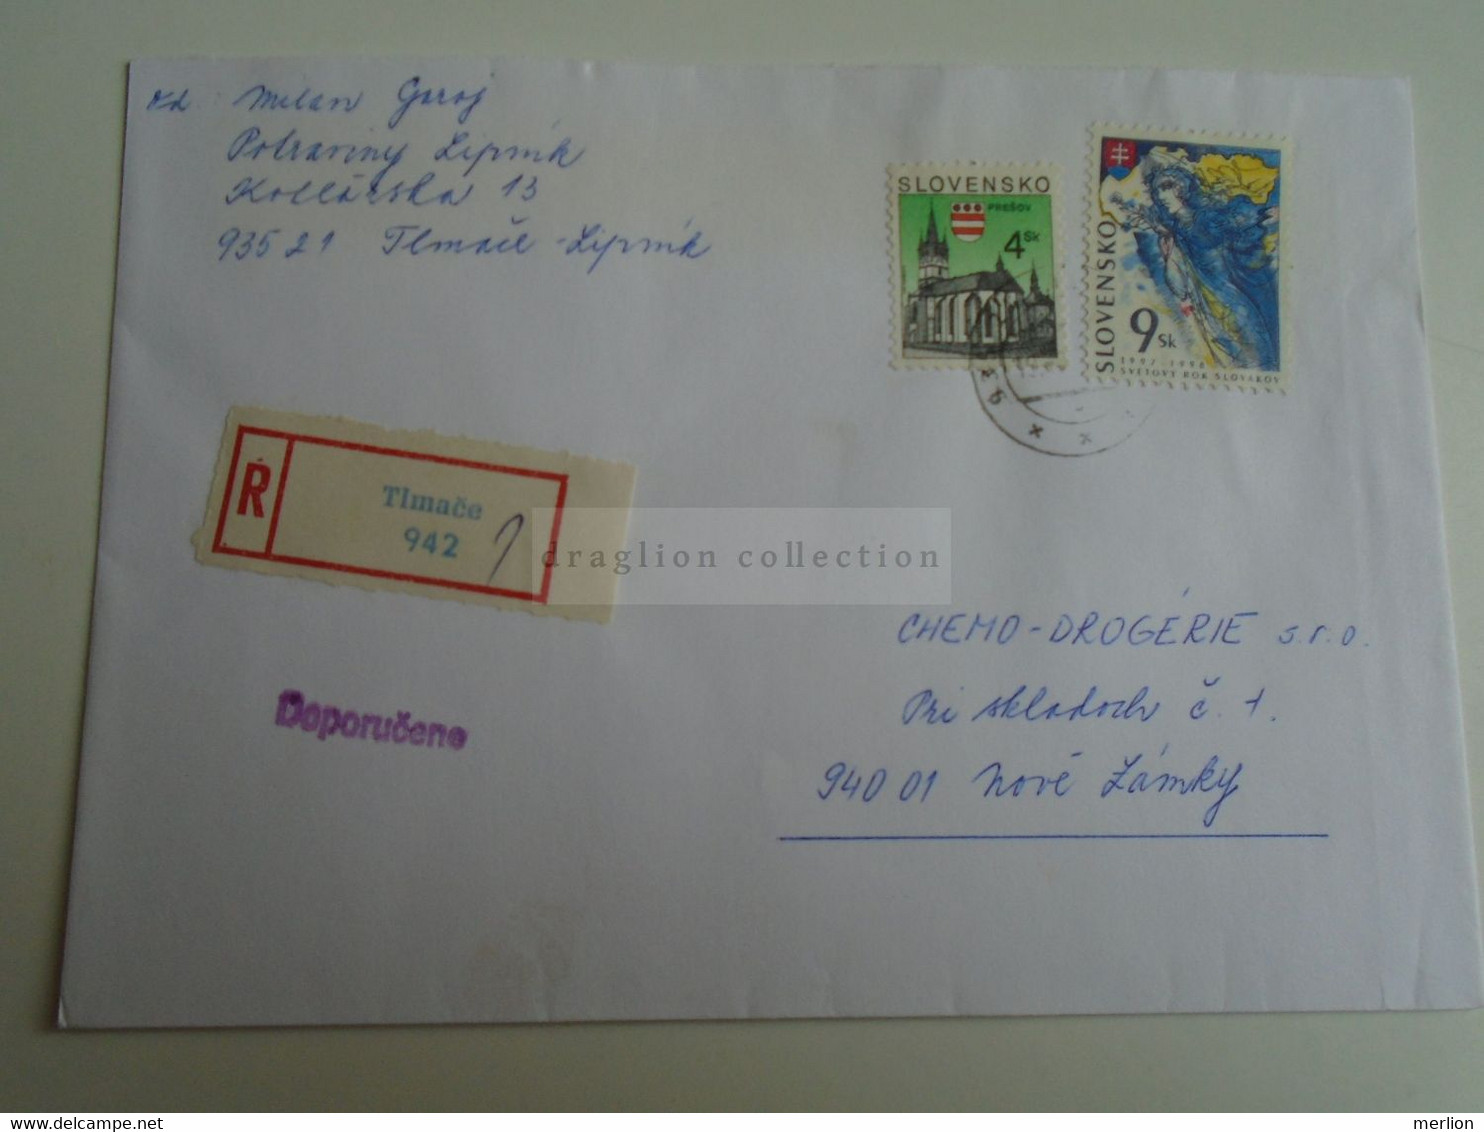 D189930   Slovensko  Slovakia   Registered Cover    1999 TLMACE Lipnik    Sent To Nove Zamky - Lettres & Documents